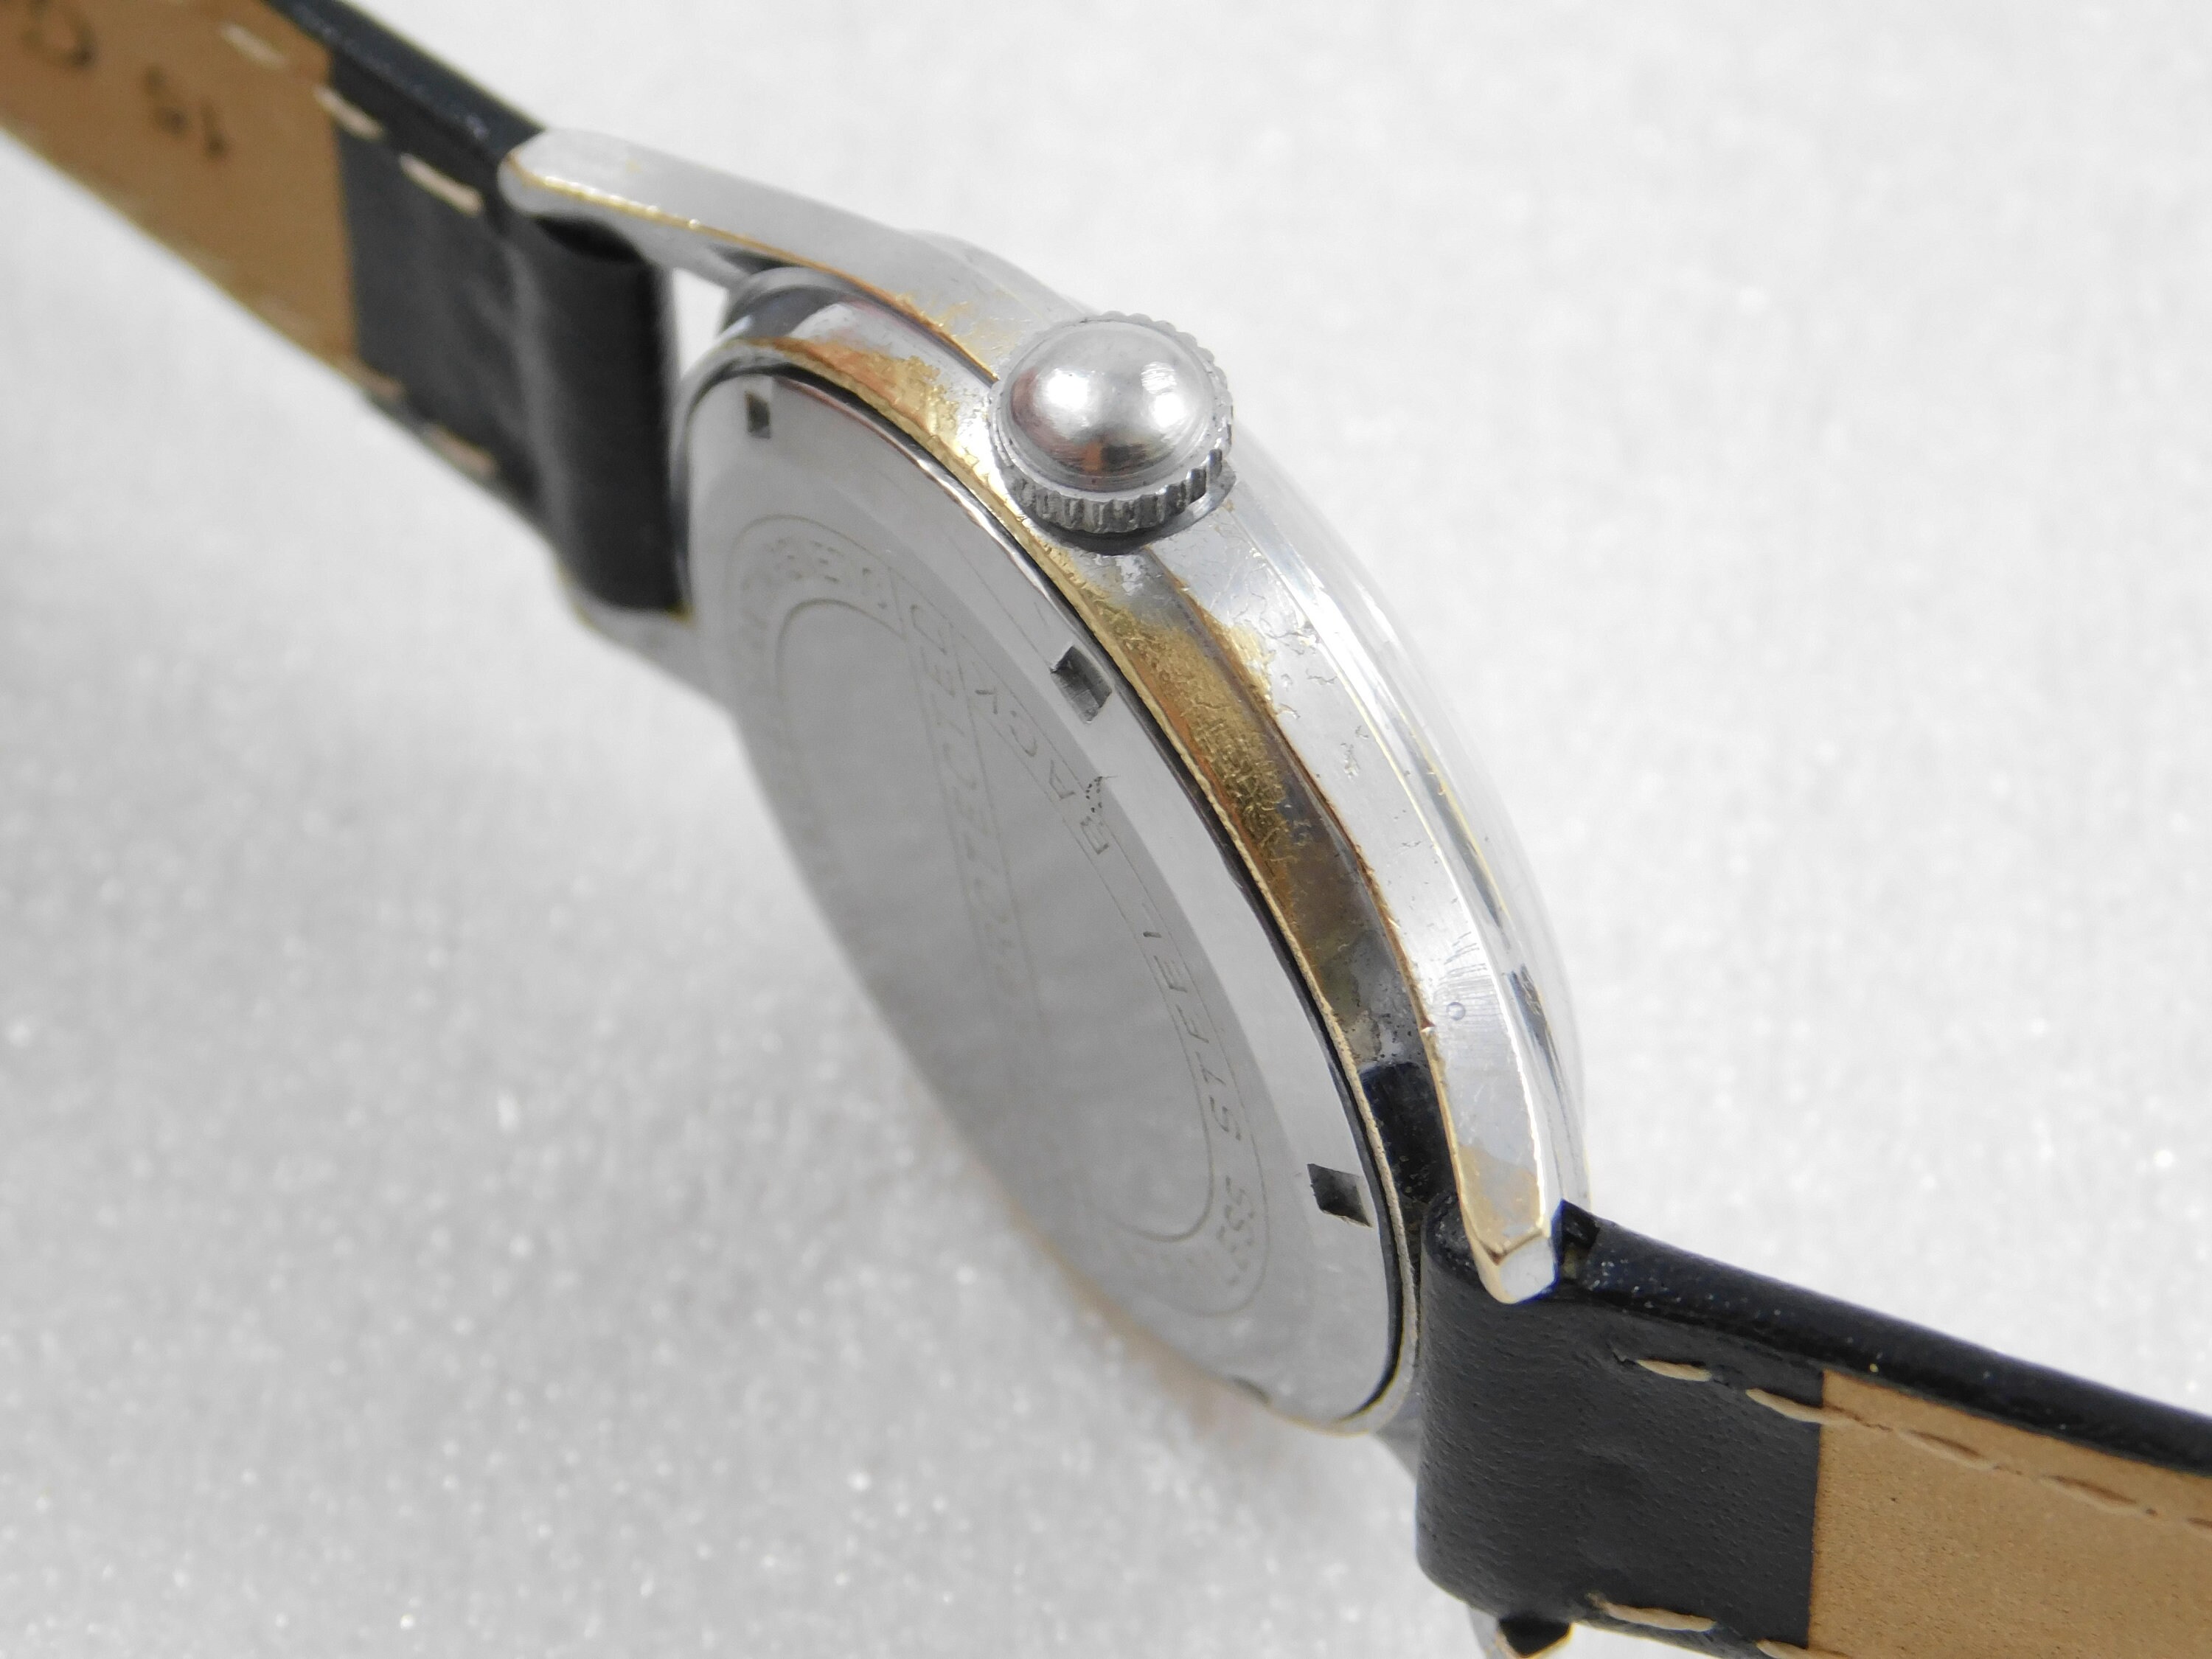 MARW17 Vintage Swiss Louis Philippe Wrist Watch, 17 Jewel Rotary  International Edition, Works.